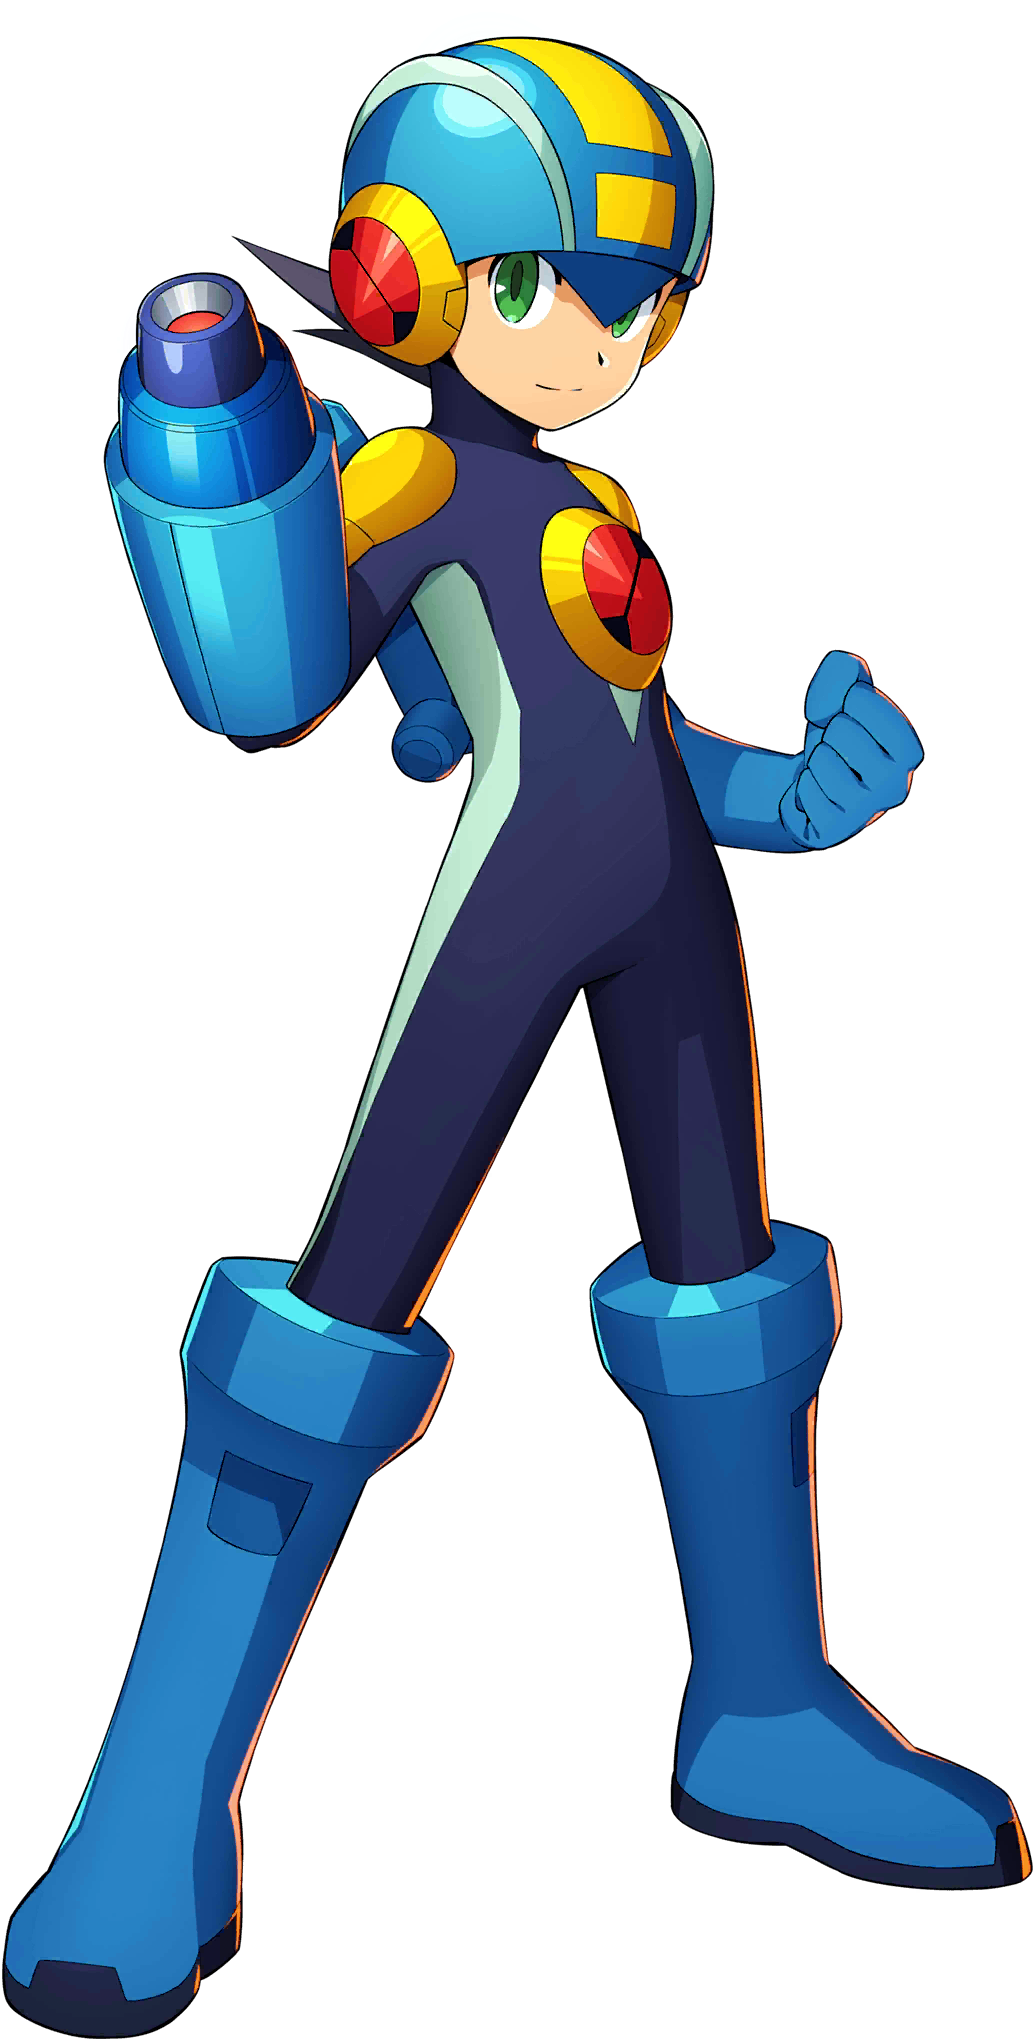 Mega Man Network Transmission - Wikipedia